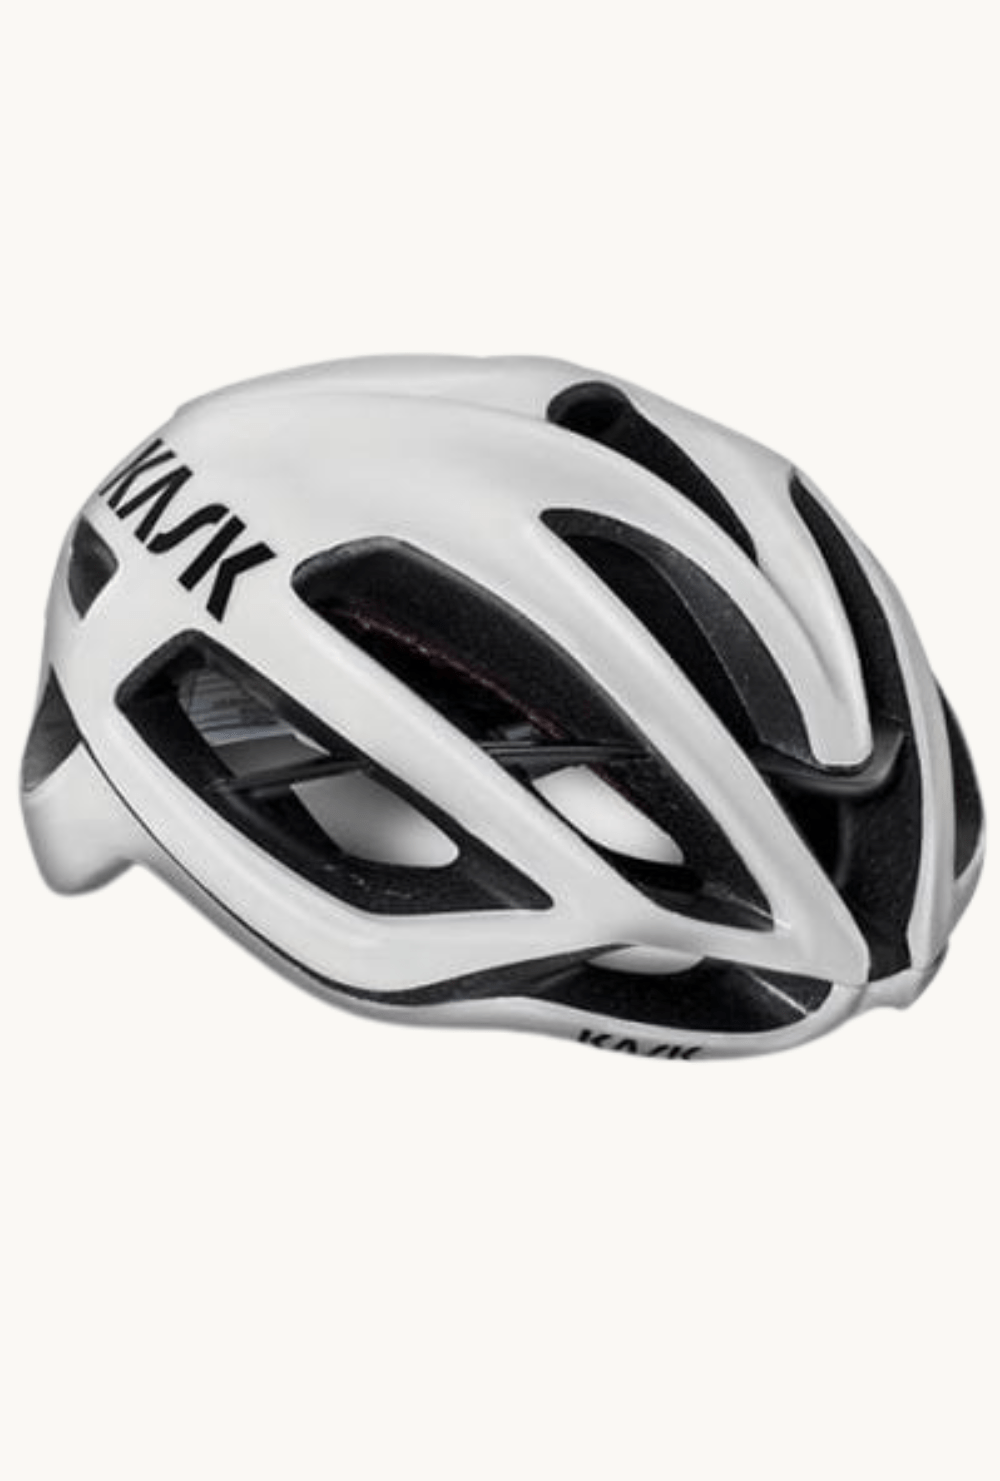 Helmet - Kask Protone Whitelarge (59-62cm) / White